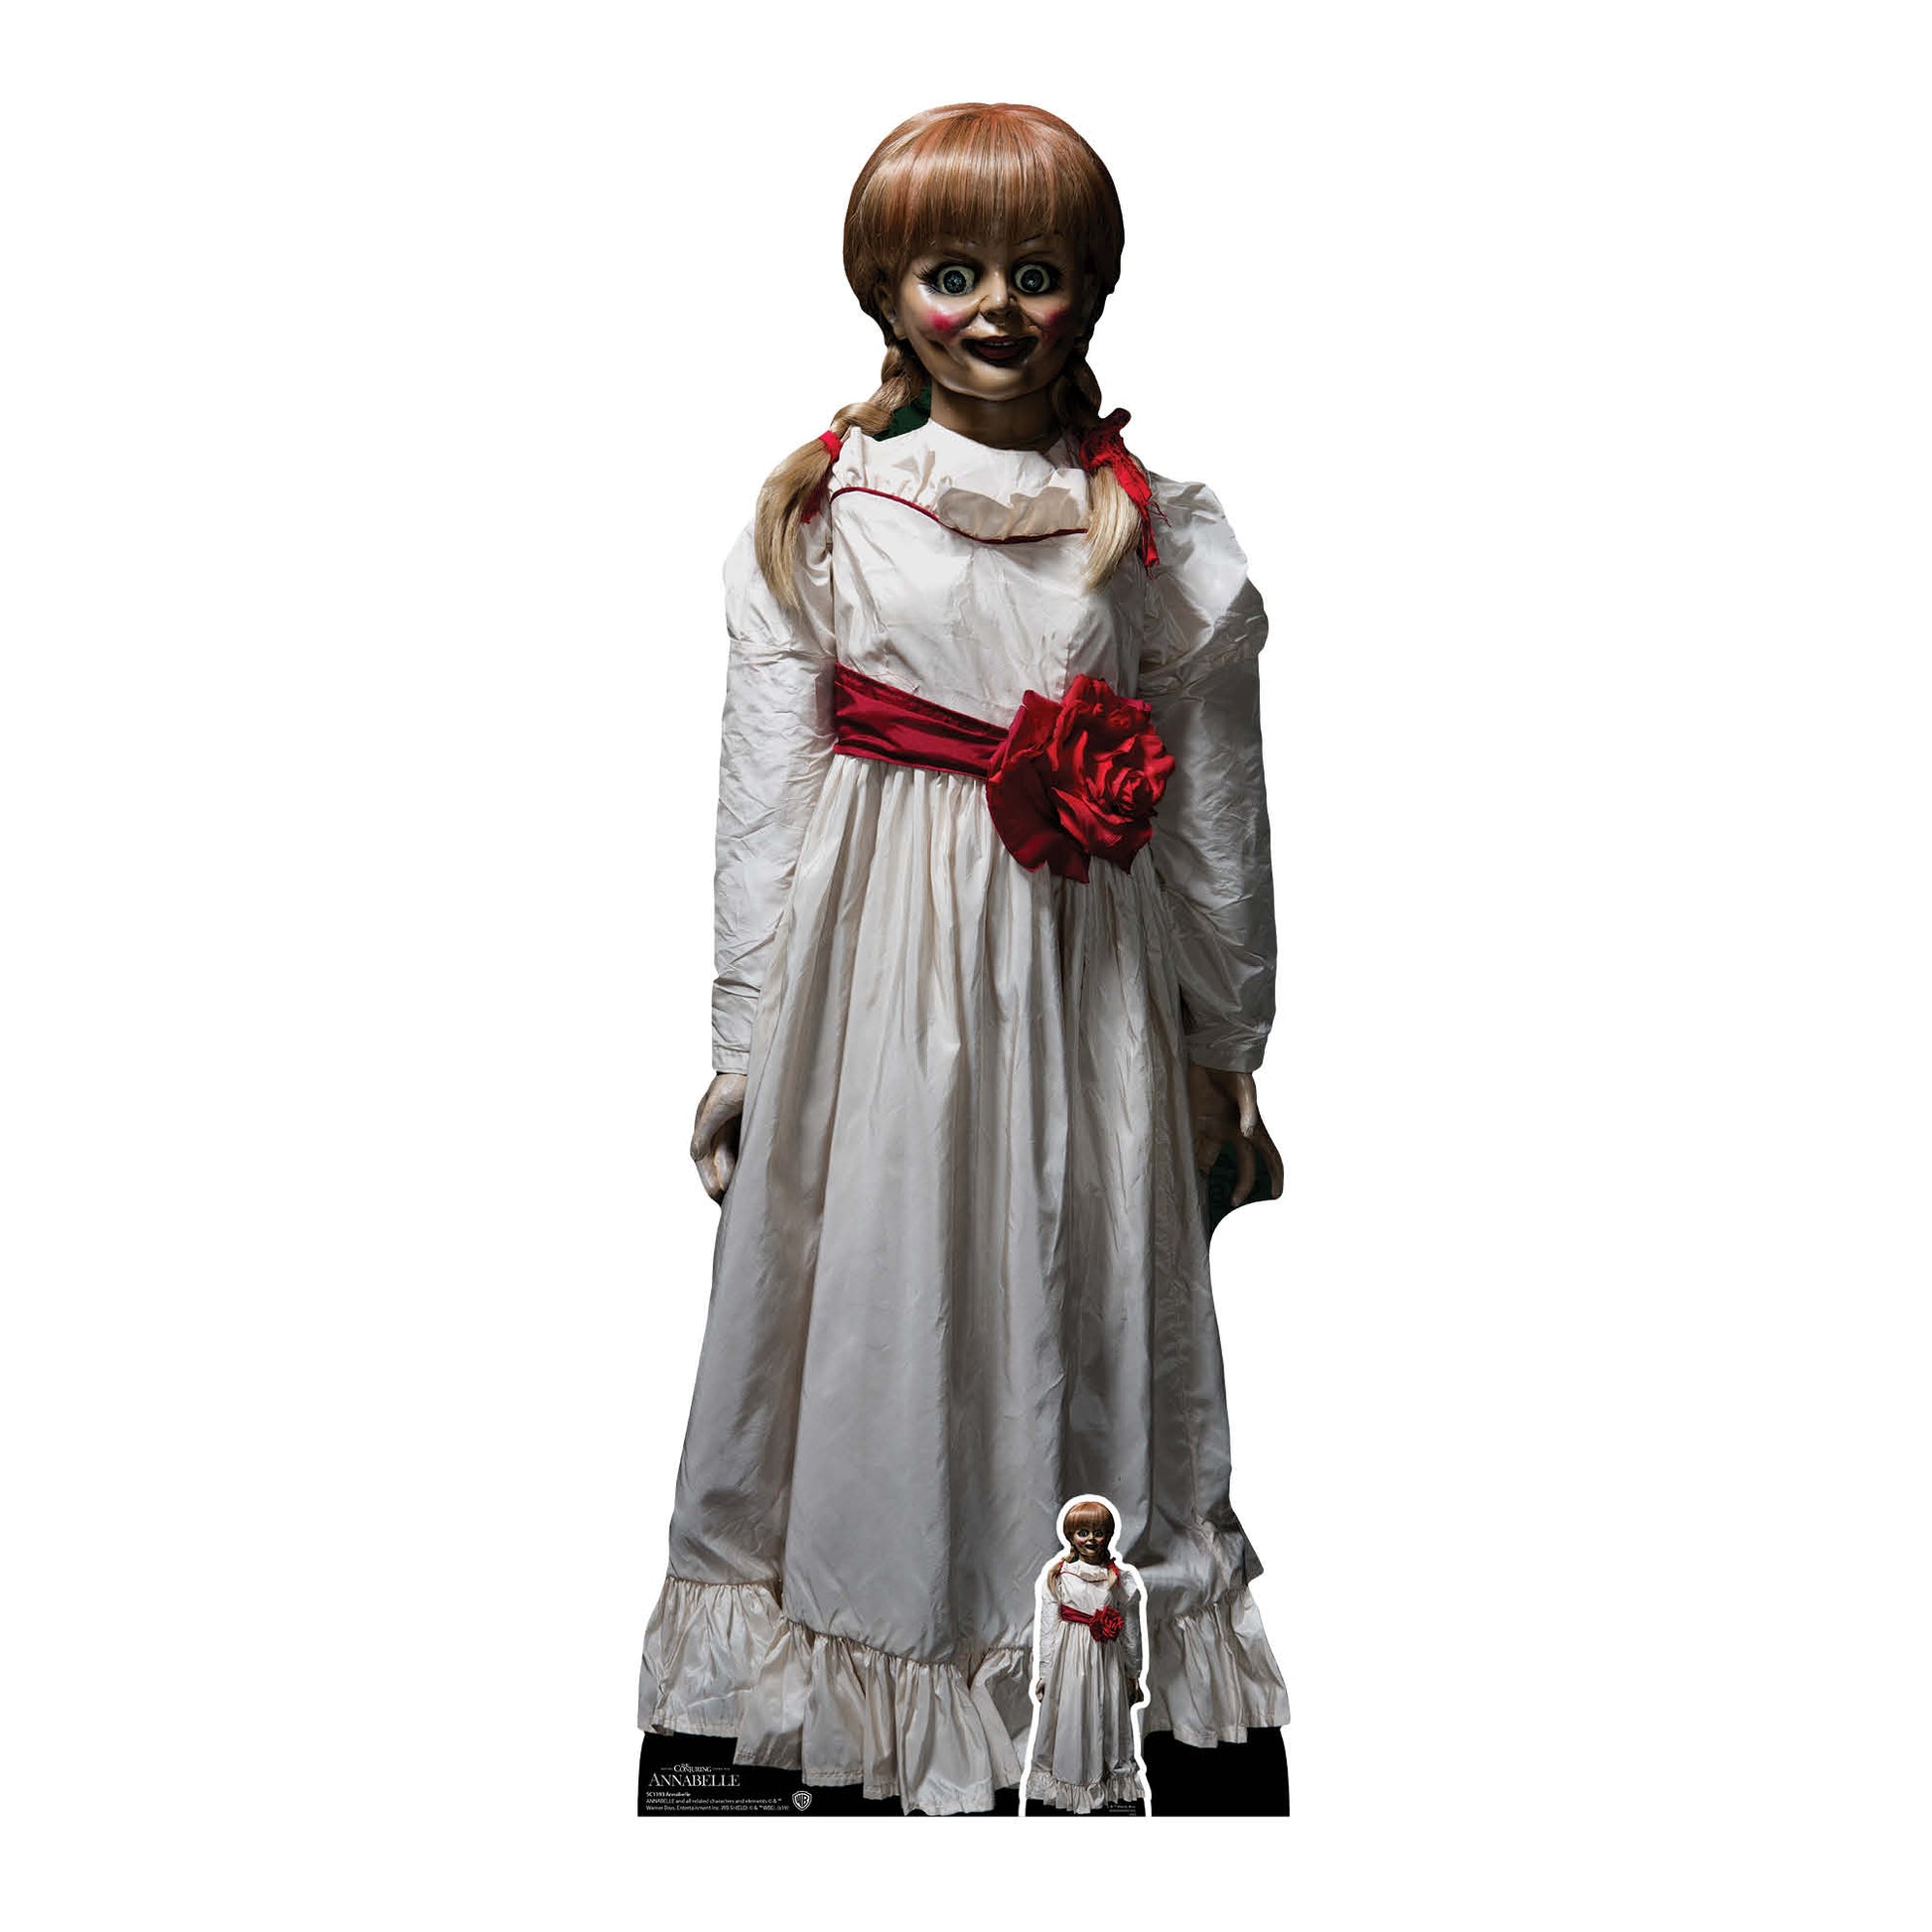 SC1393 Annabelle Doll Cardboard Cut Out Height 129cm - Star Cutouts